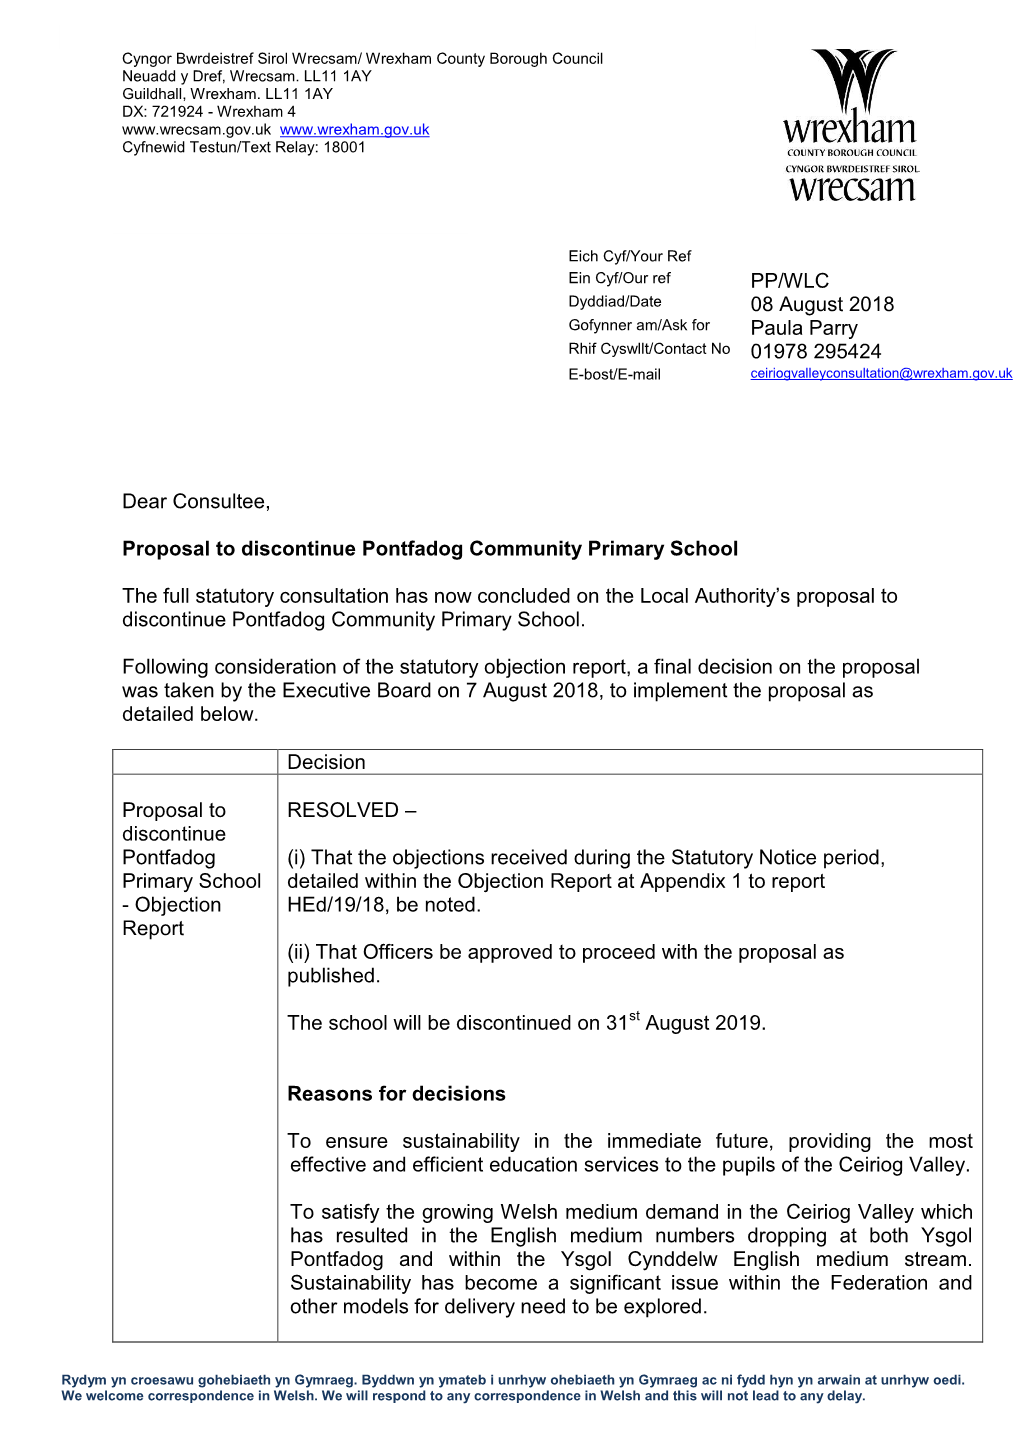 Proposal to Discontinue Pontfadog Community Primary School